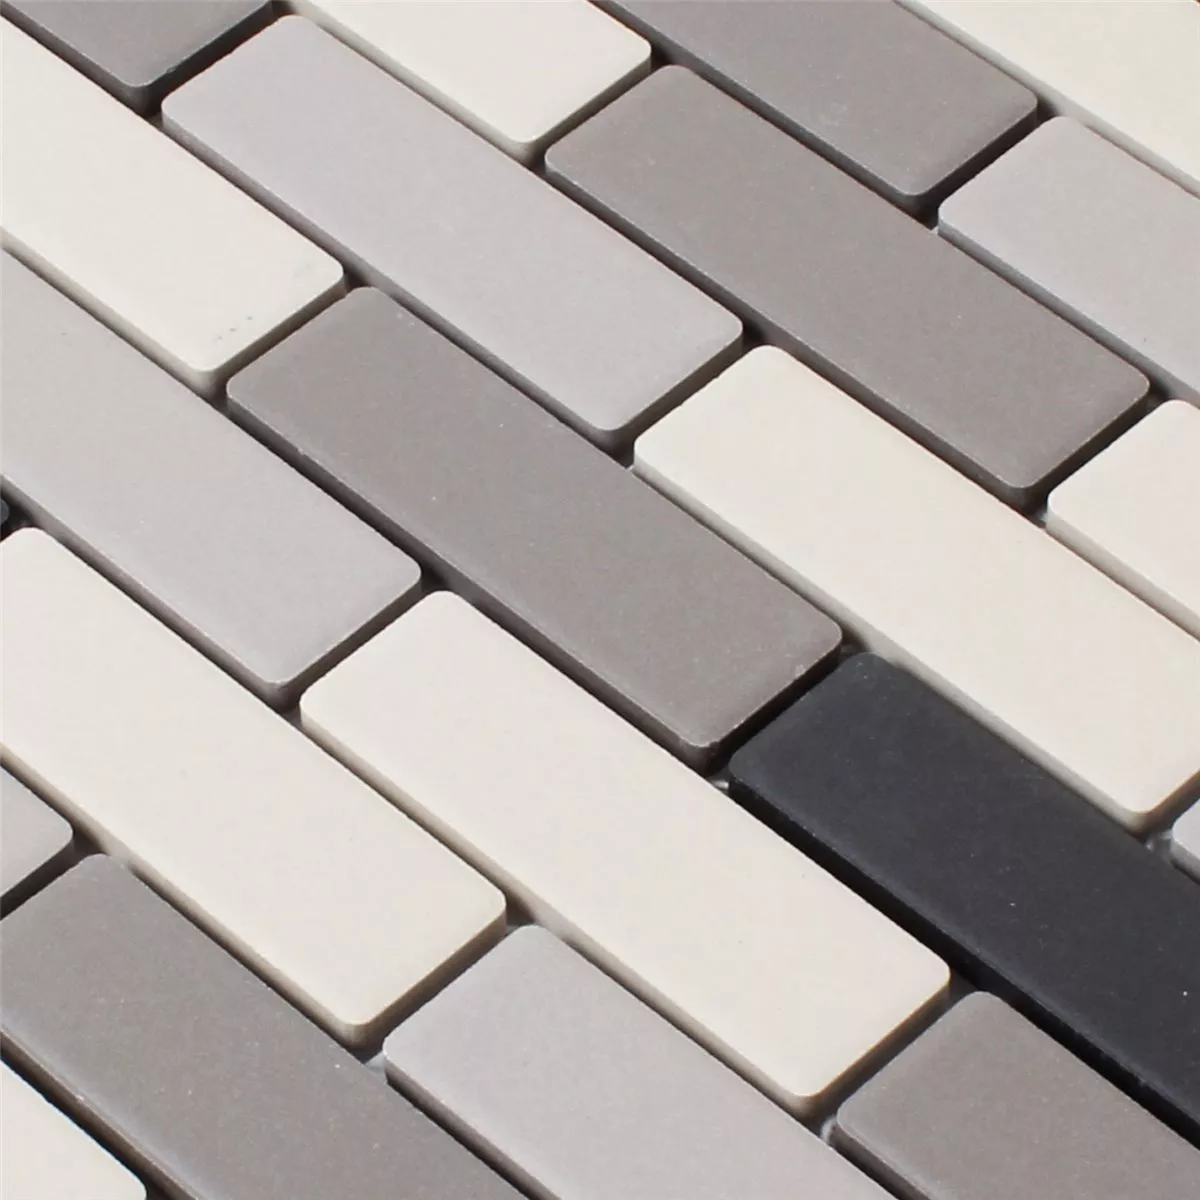 Sample Mosaic Tiles Ceramic Beige Grey Unglazed